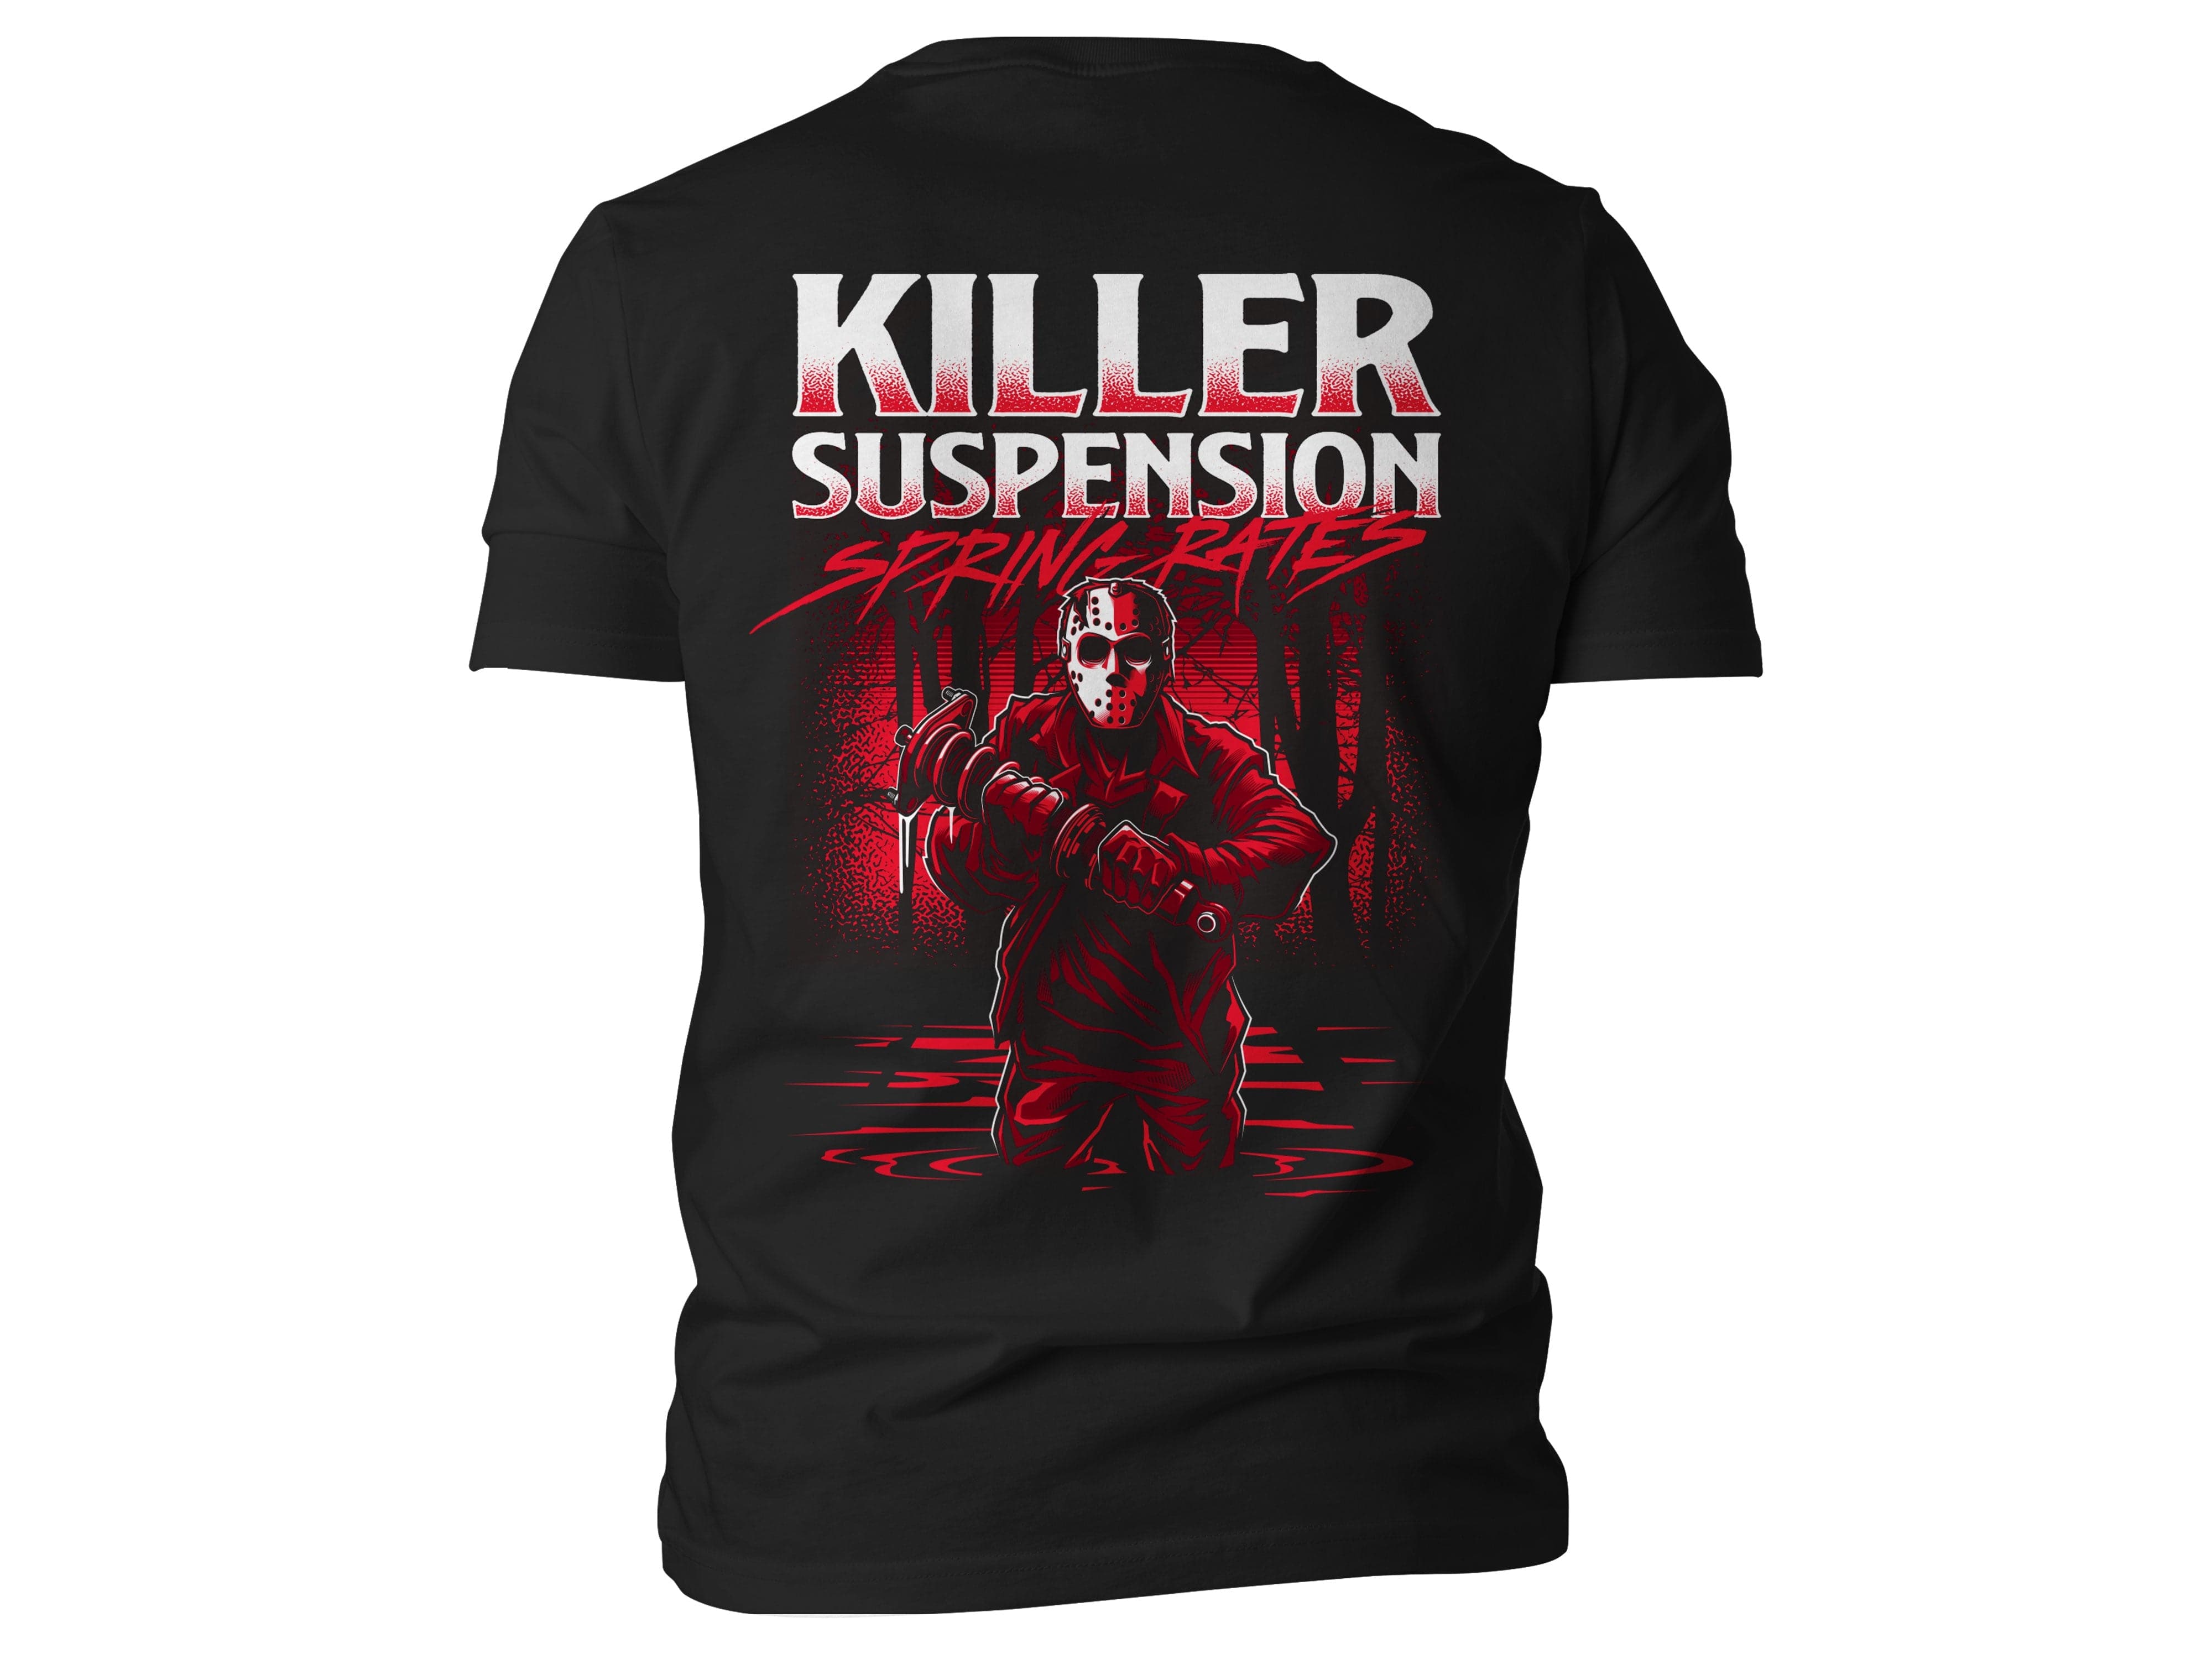 Springrates 'Killer Suspension' Shirt - Black